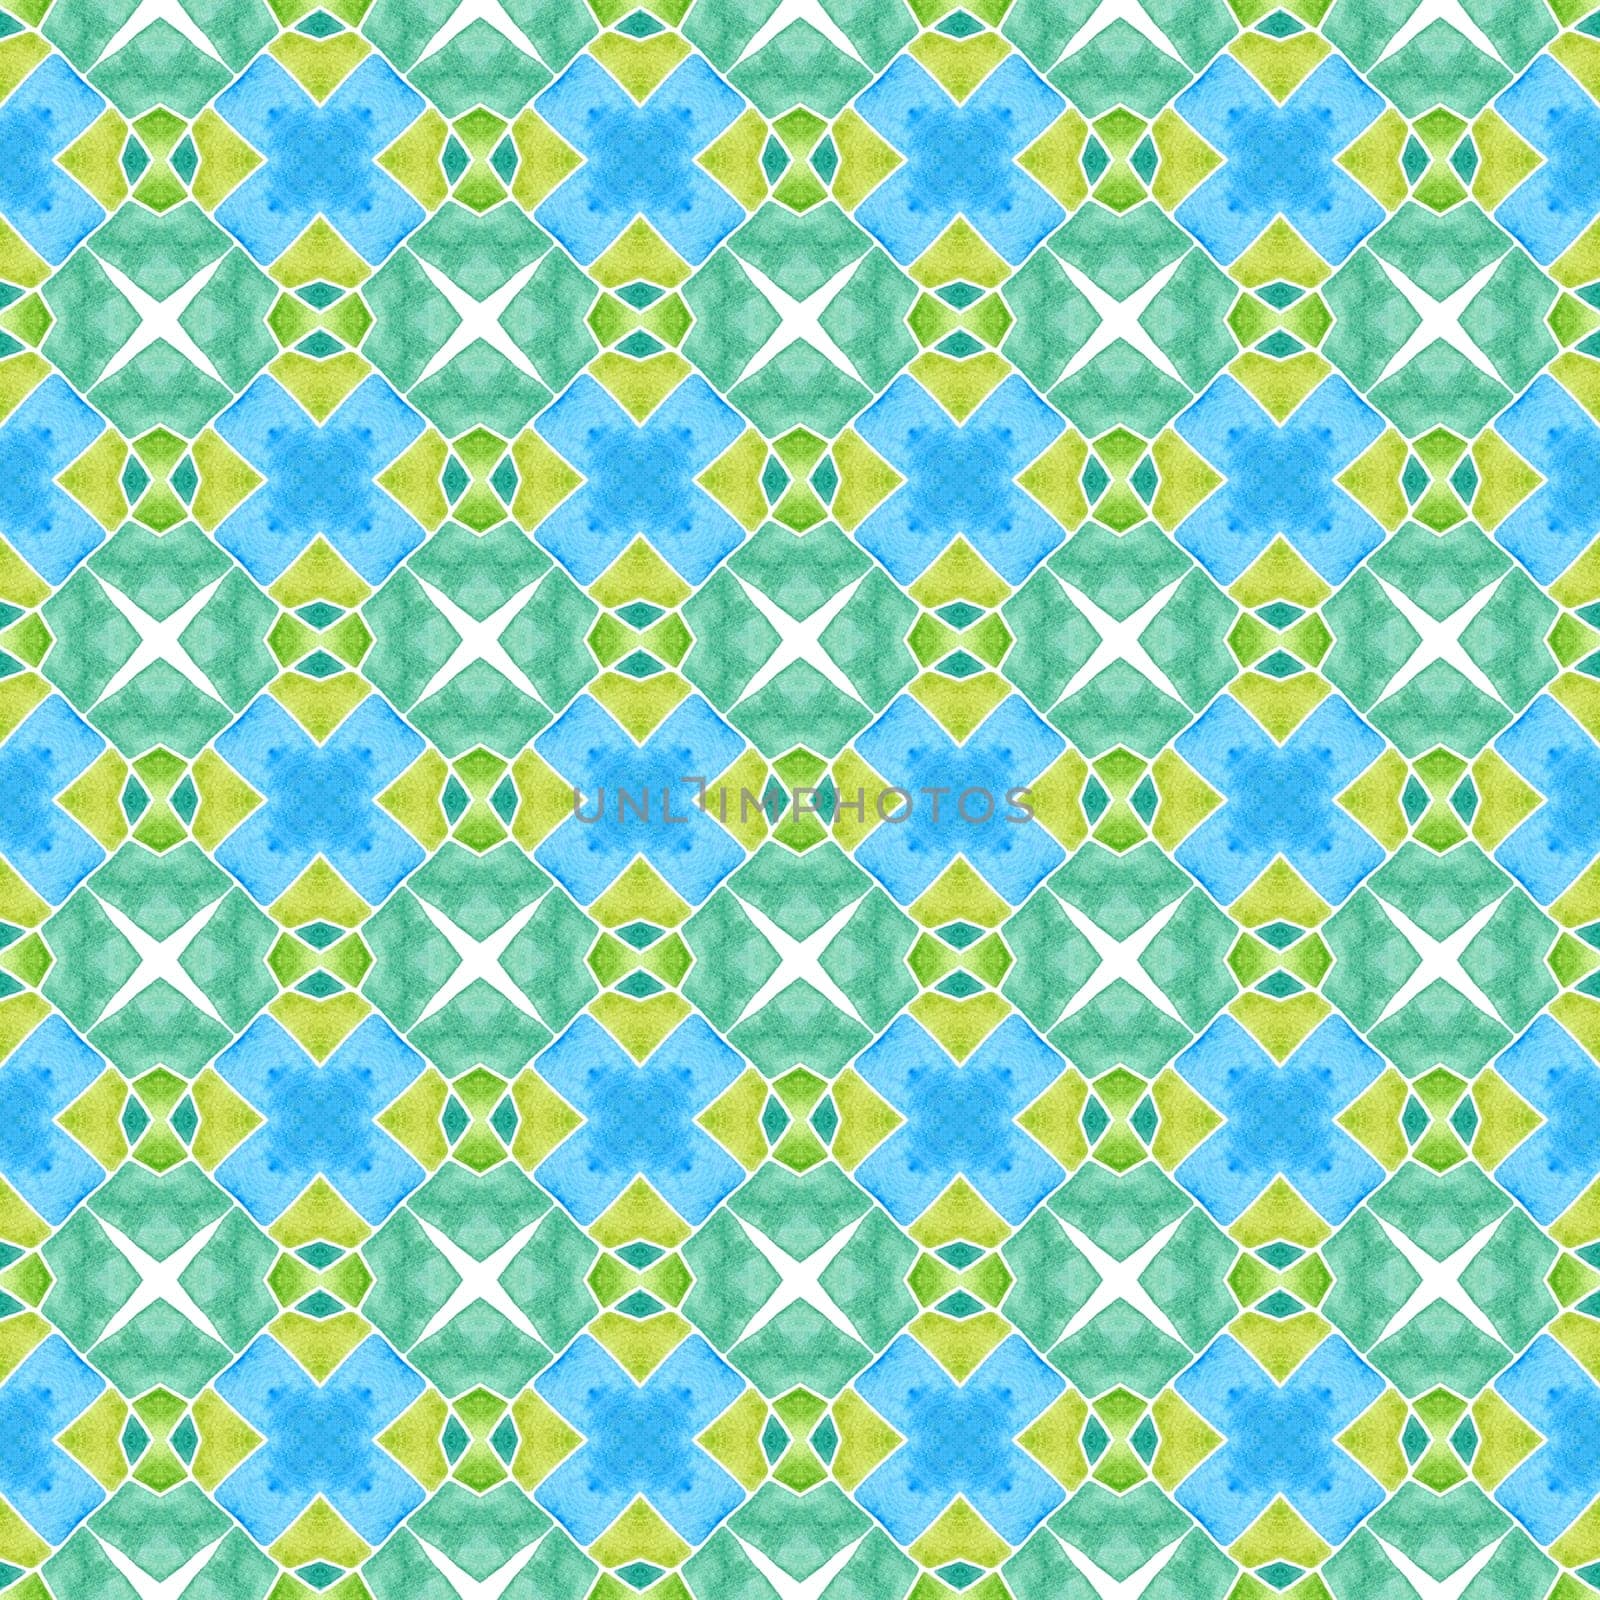 Green geometric chevron watercolor border. Green dramatic boho chic summer design. Textile ready artistic print, swimwear fabric, wallpaper, wrapping. Chevron watercolor pattern.